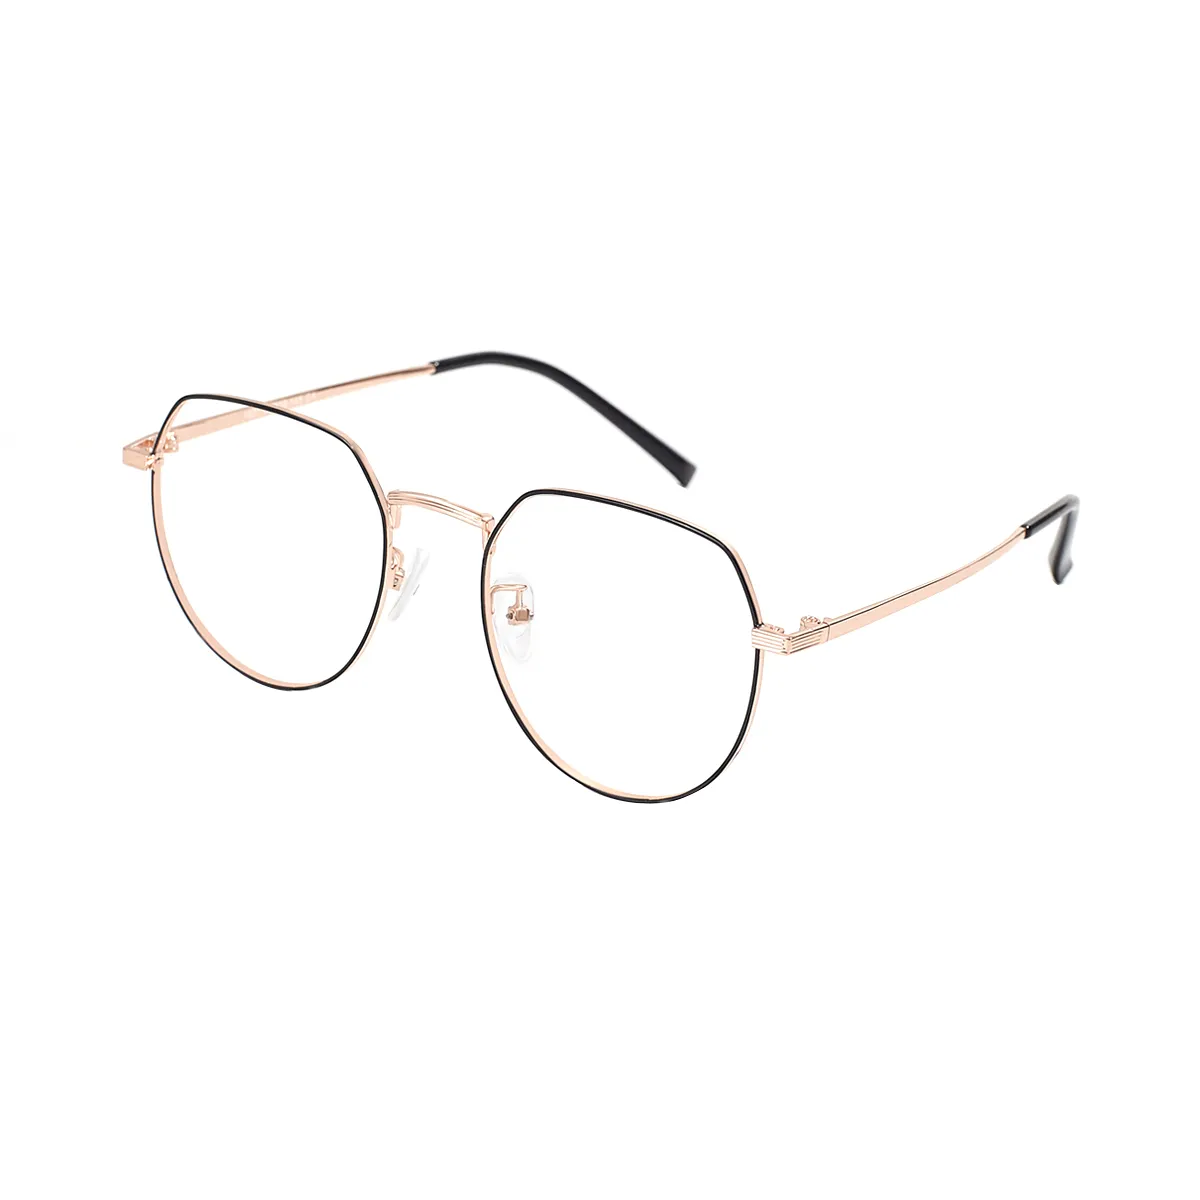 Izabel - Oval Black-Gold Glasses for Women